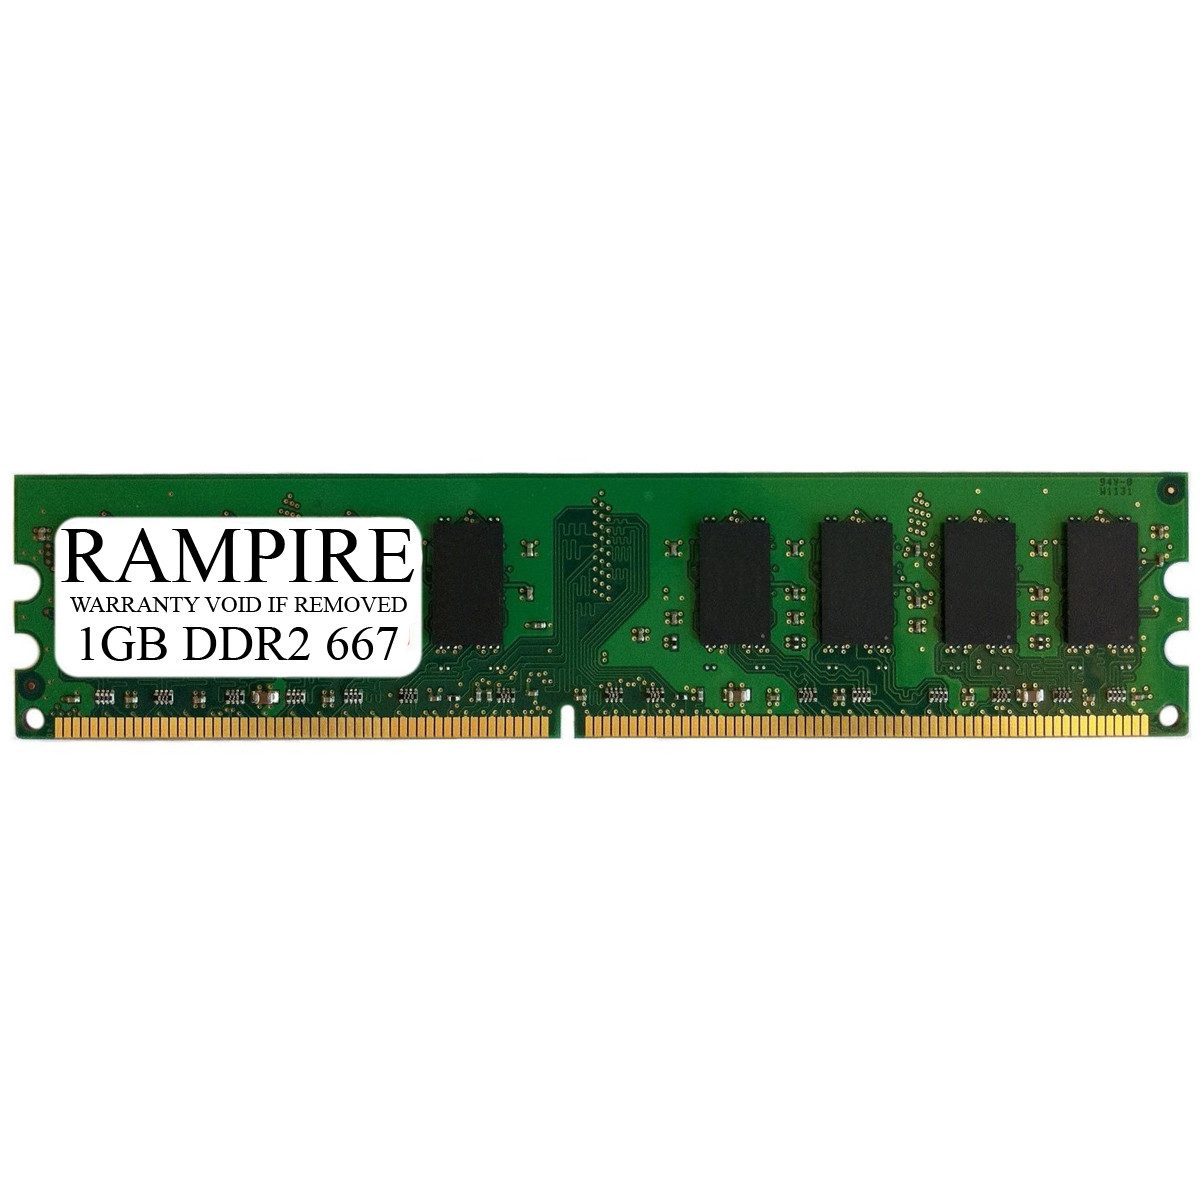 RAMPIRE 1GB DDR2 667 (PC2 5400) 240-Pin DDR2 SDRAM 1.8V 2Rx8 Non-ECC UDIMM Memory for Desktop PC